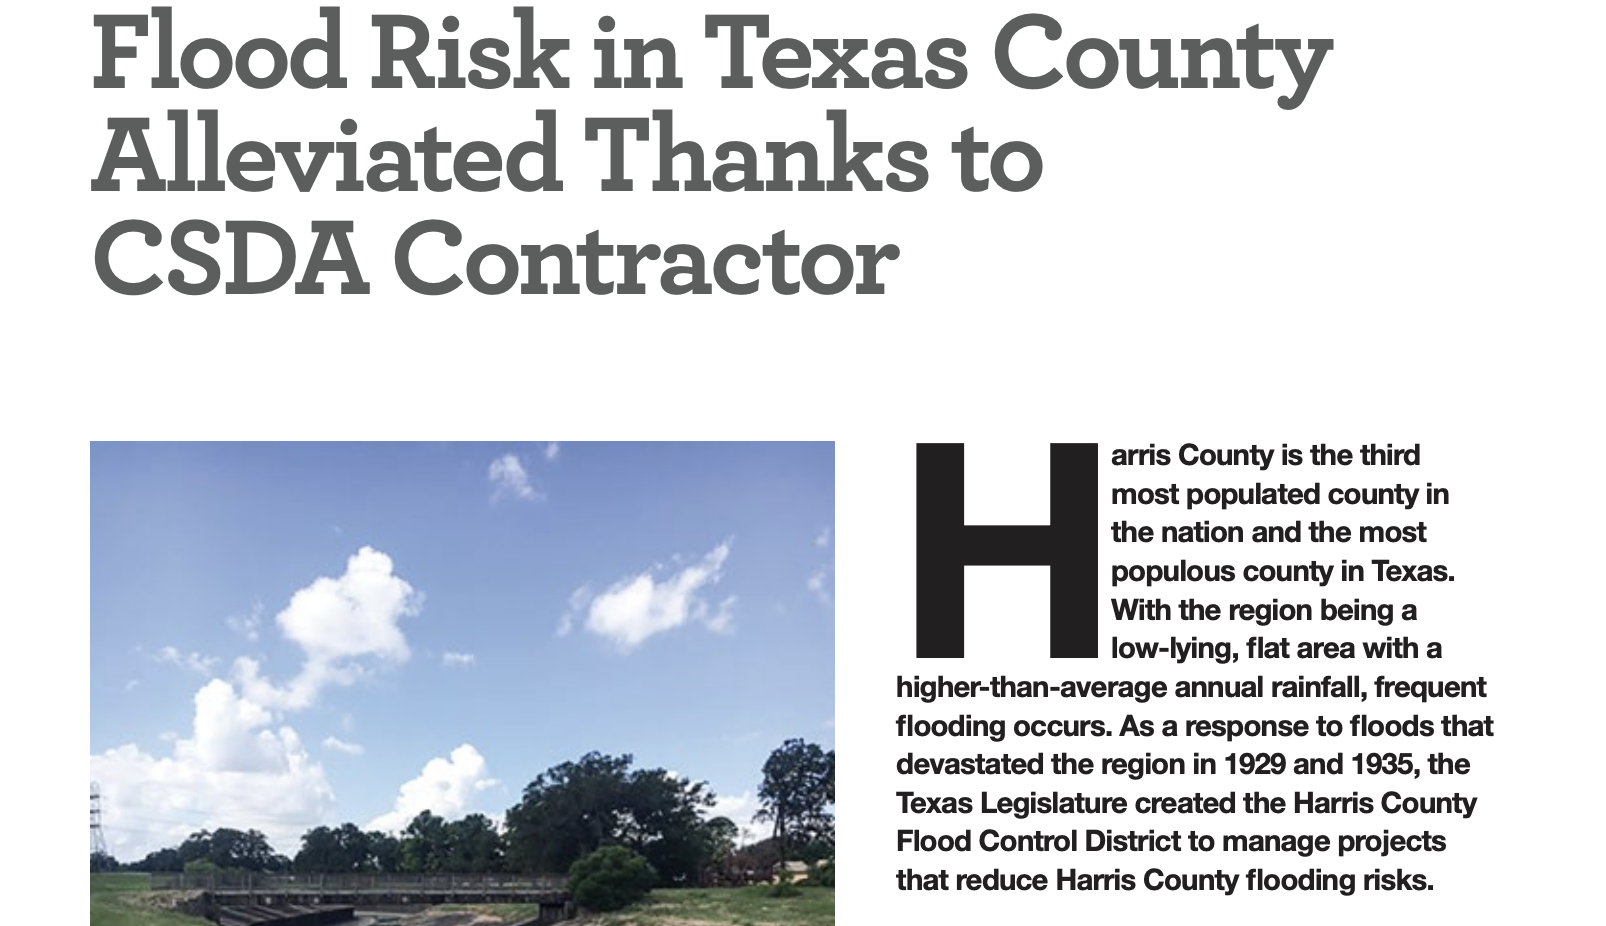 CSDA Contractor Removes Three Bridges to Help Alleviate Texas County Flood Risk